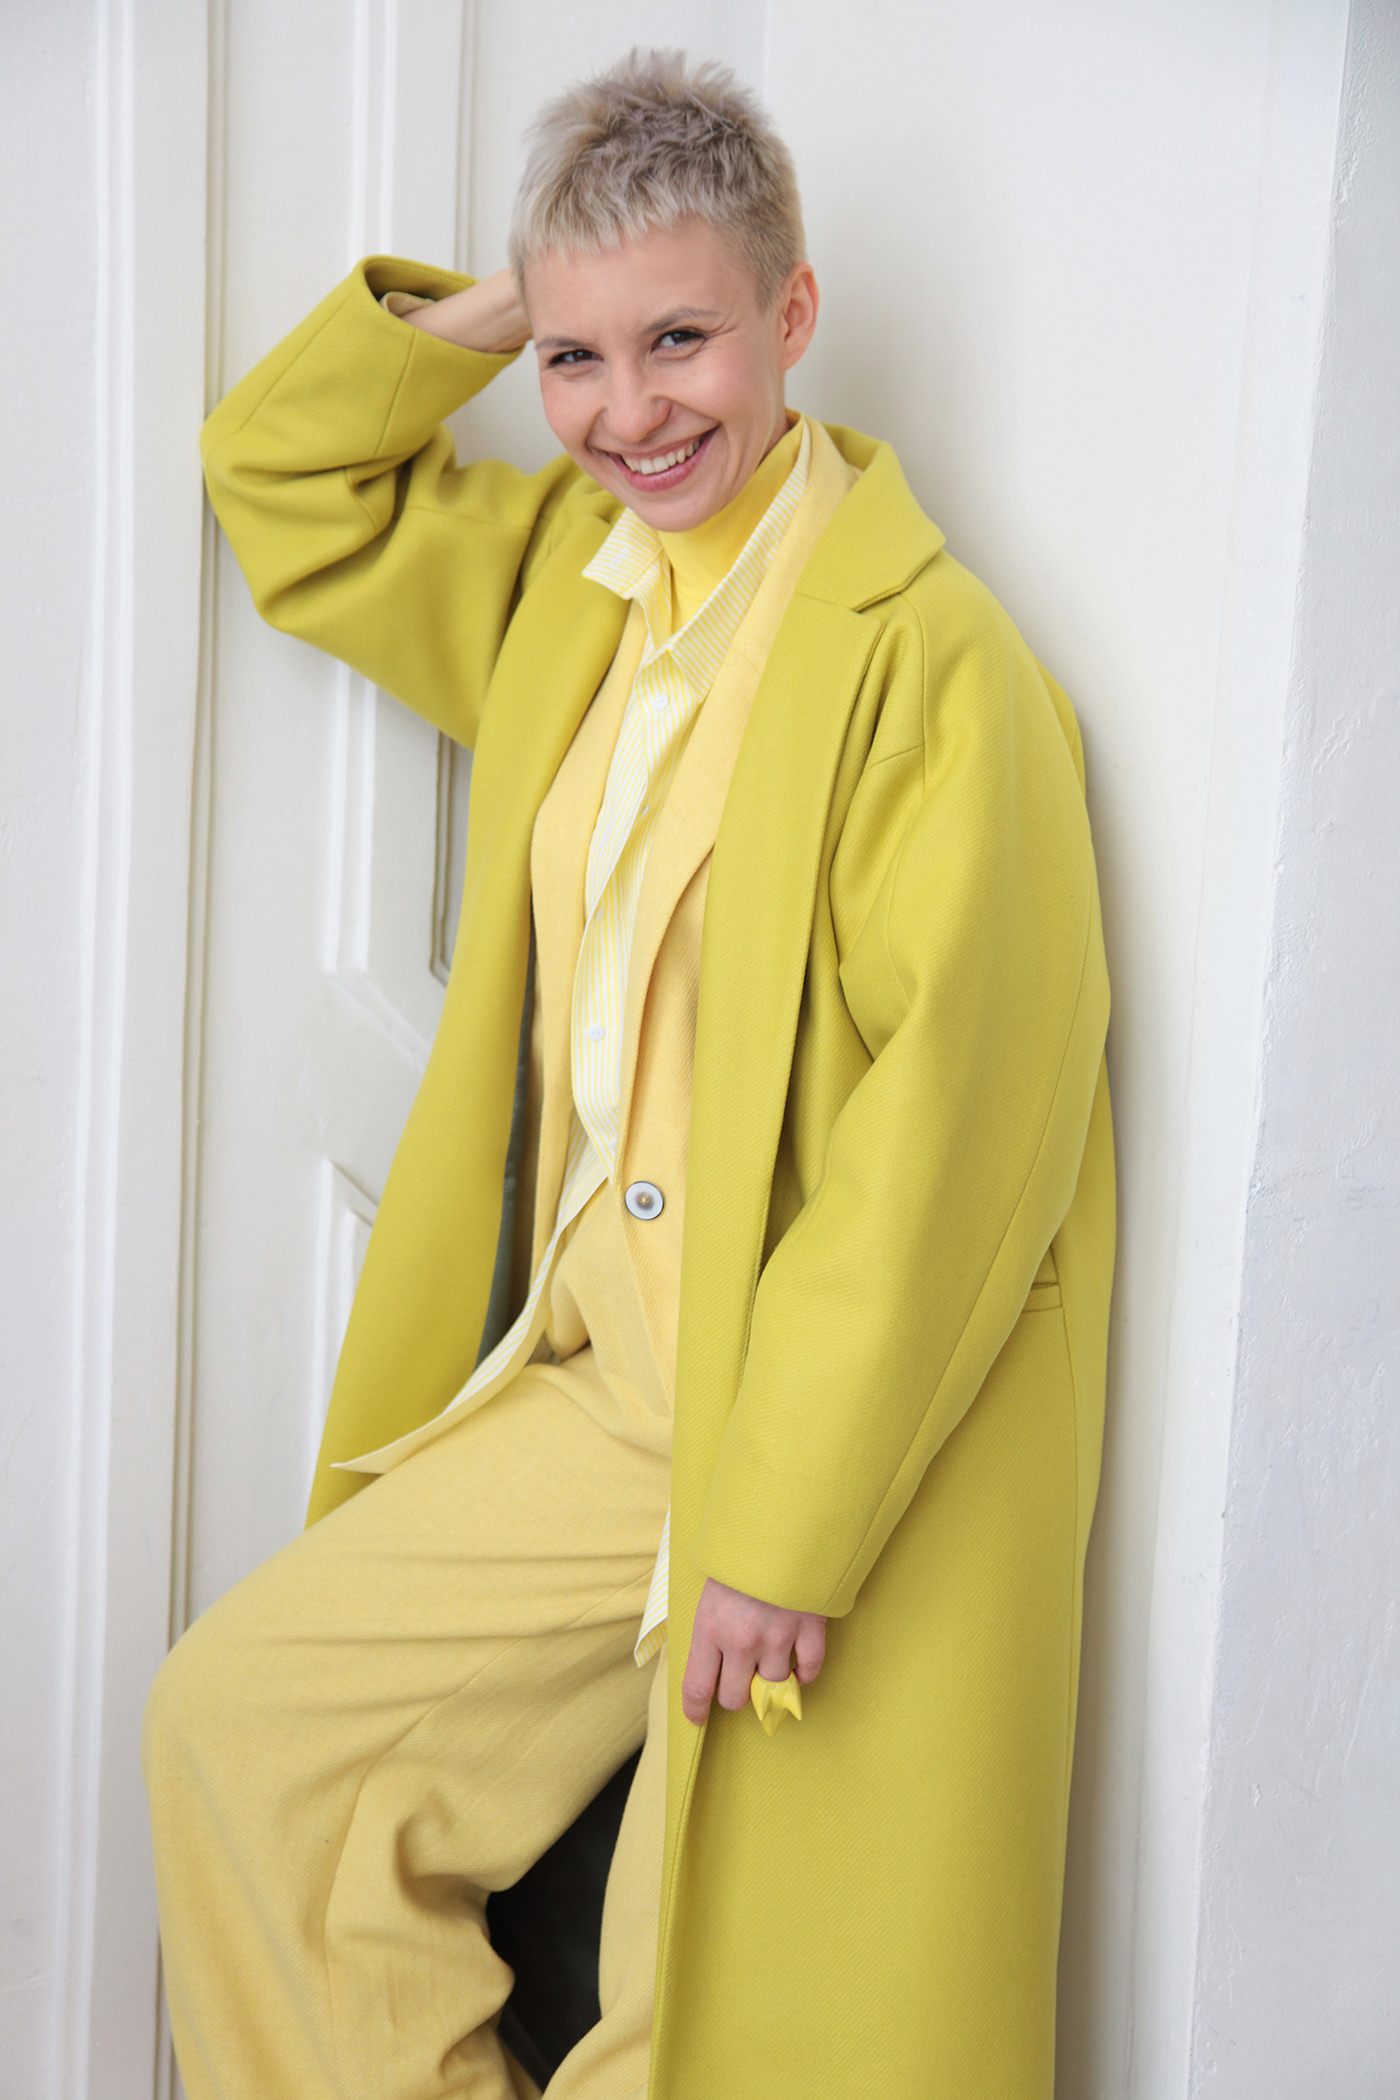 belarus catalog Clothing Fashion  Lookbook minsk stylist